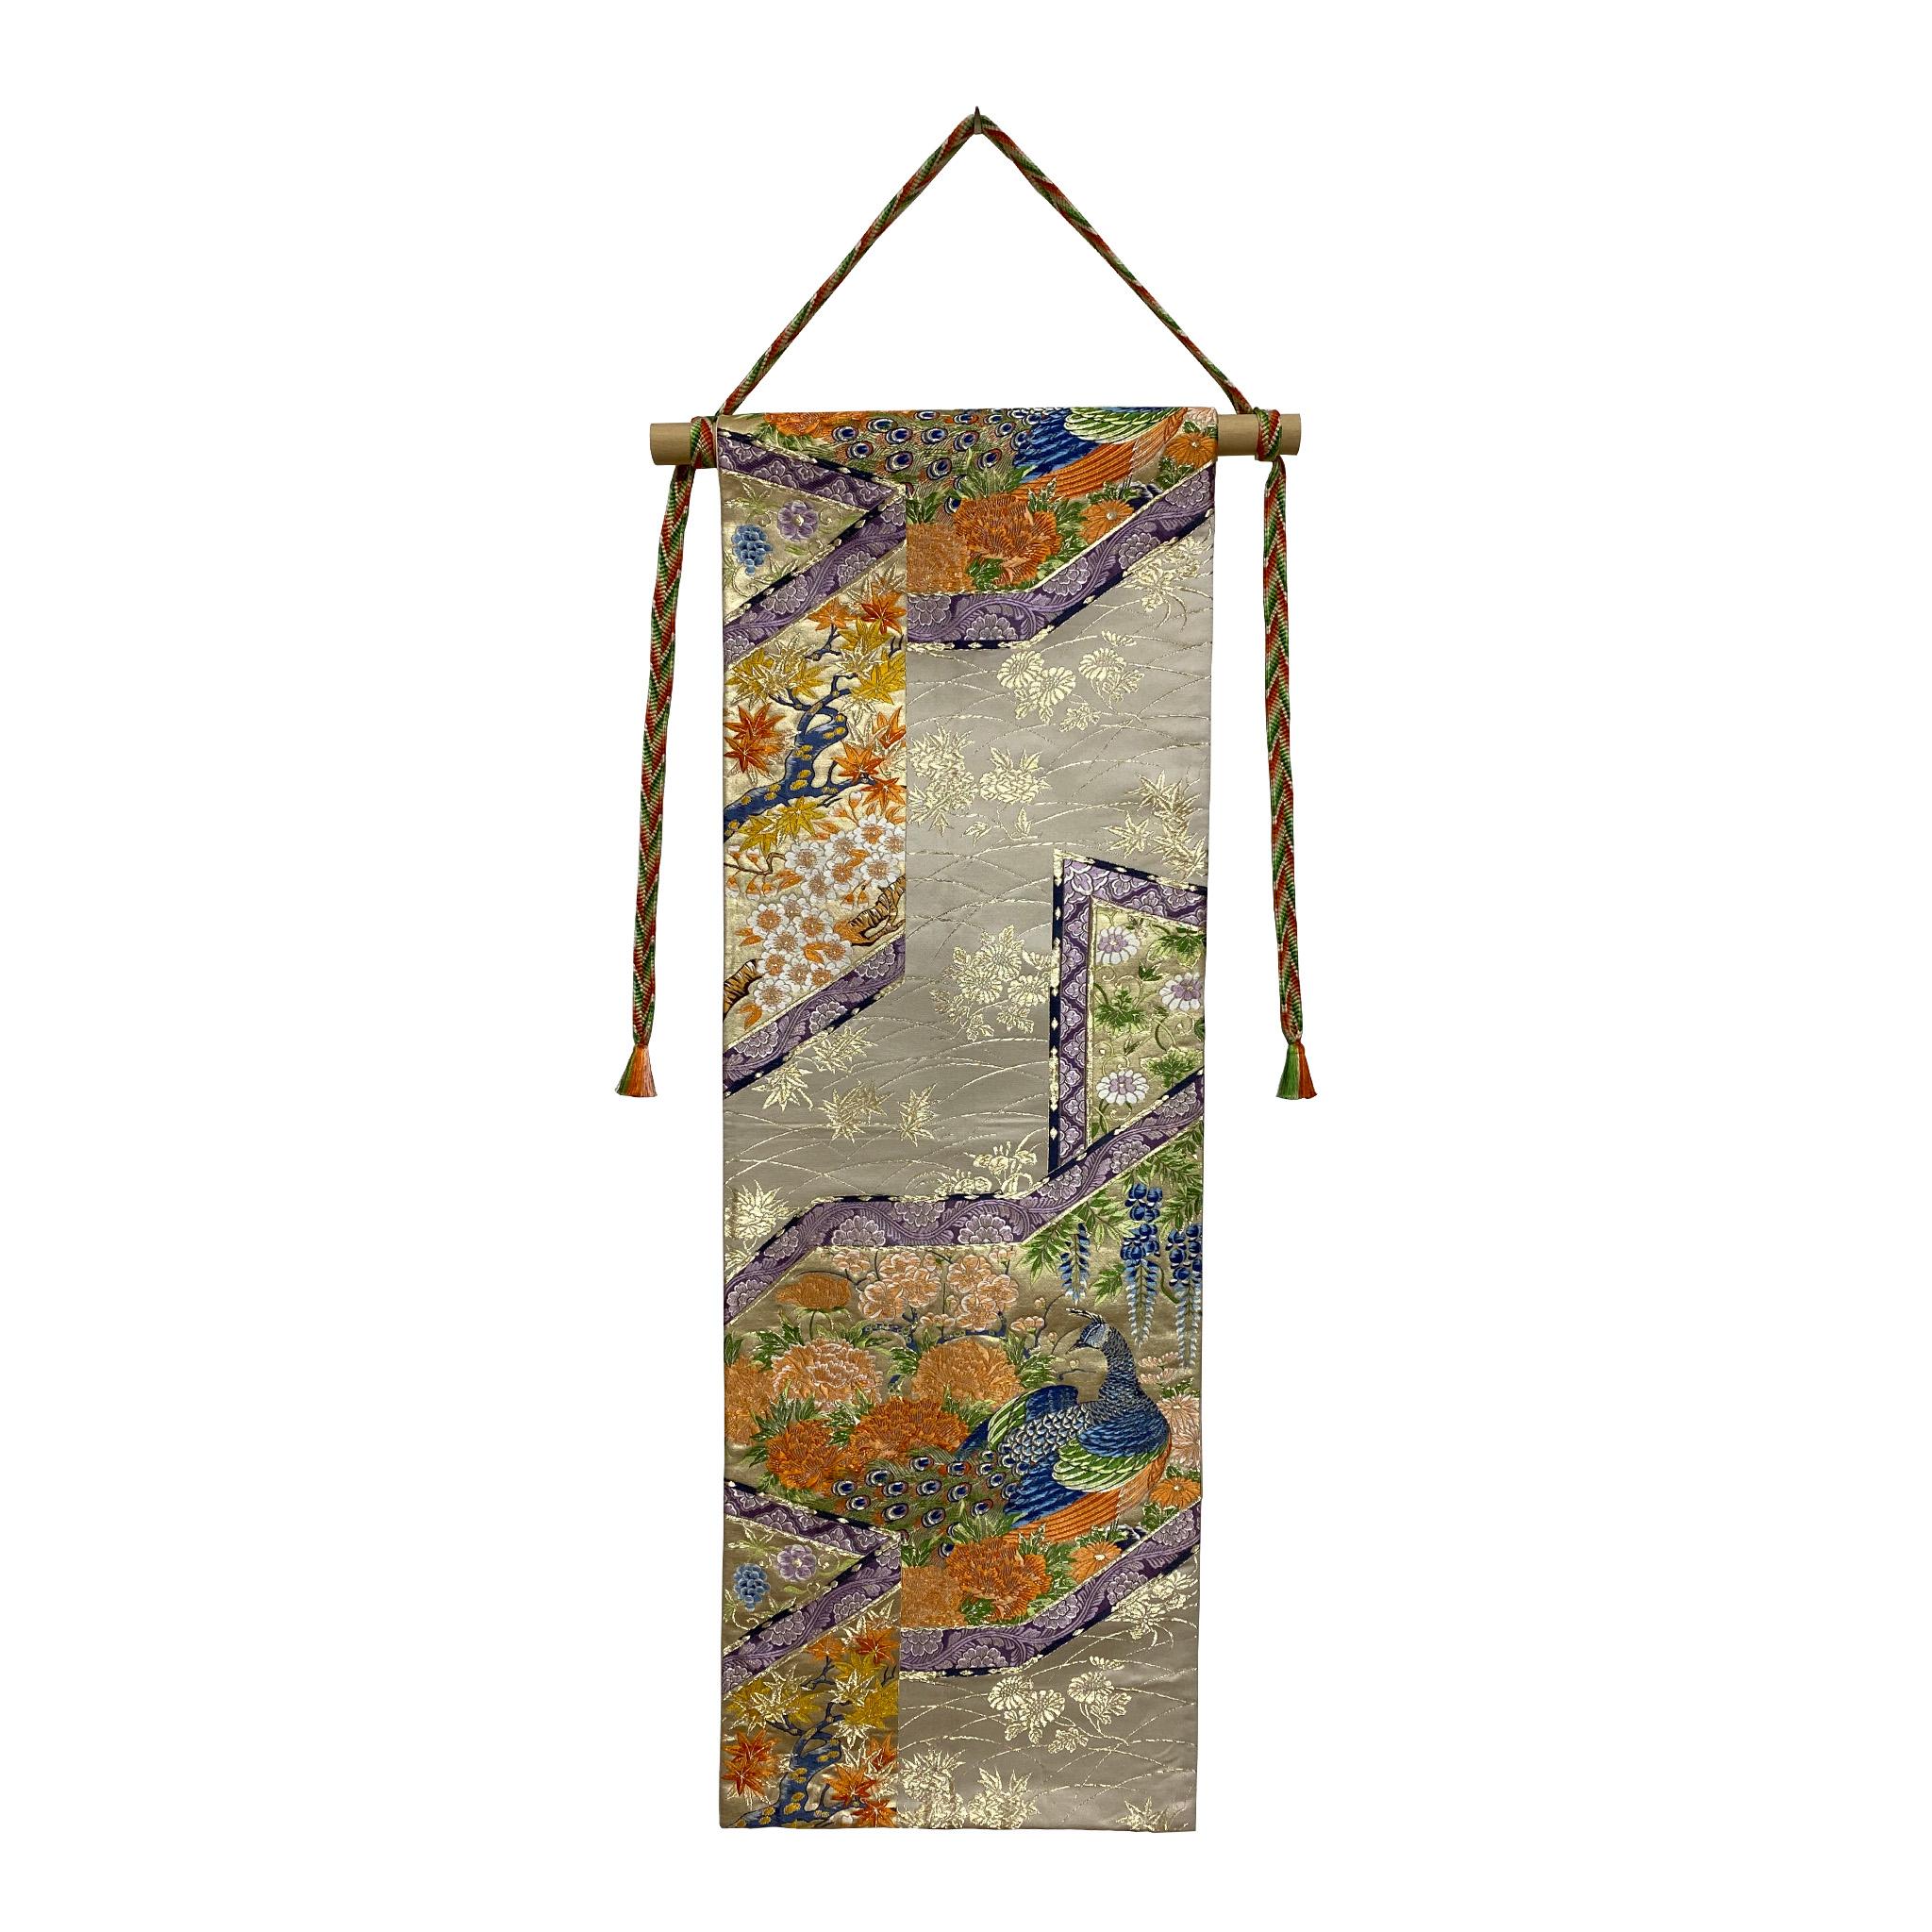 Kimono Art / Japanese Art / Kimono Tapestry, "The King of Peacocks" For Sale